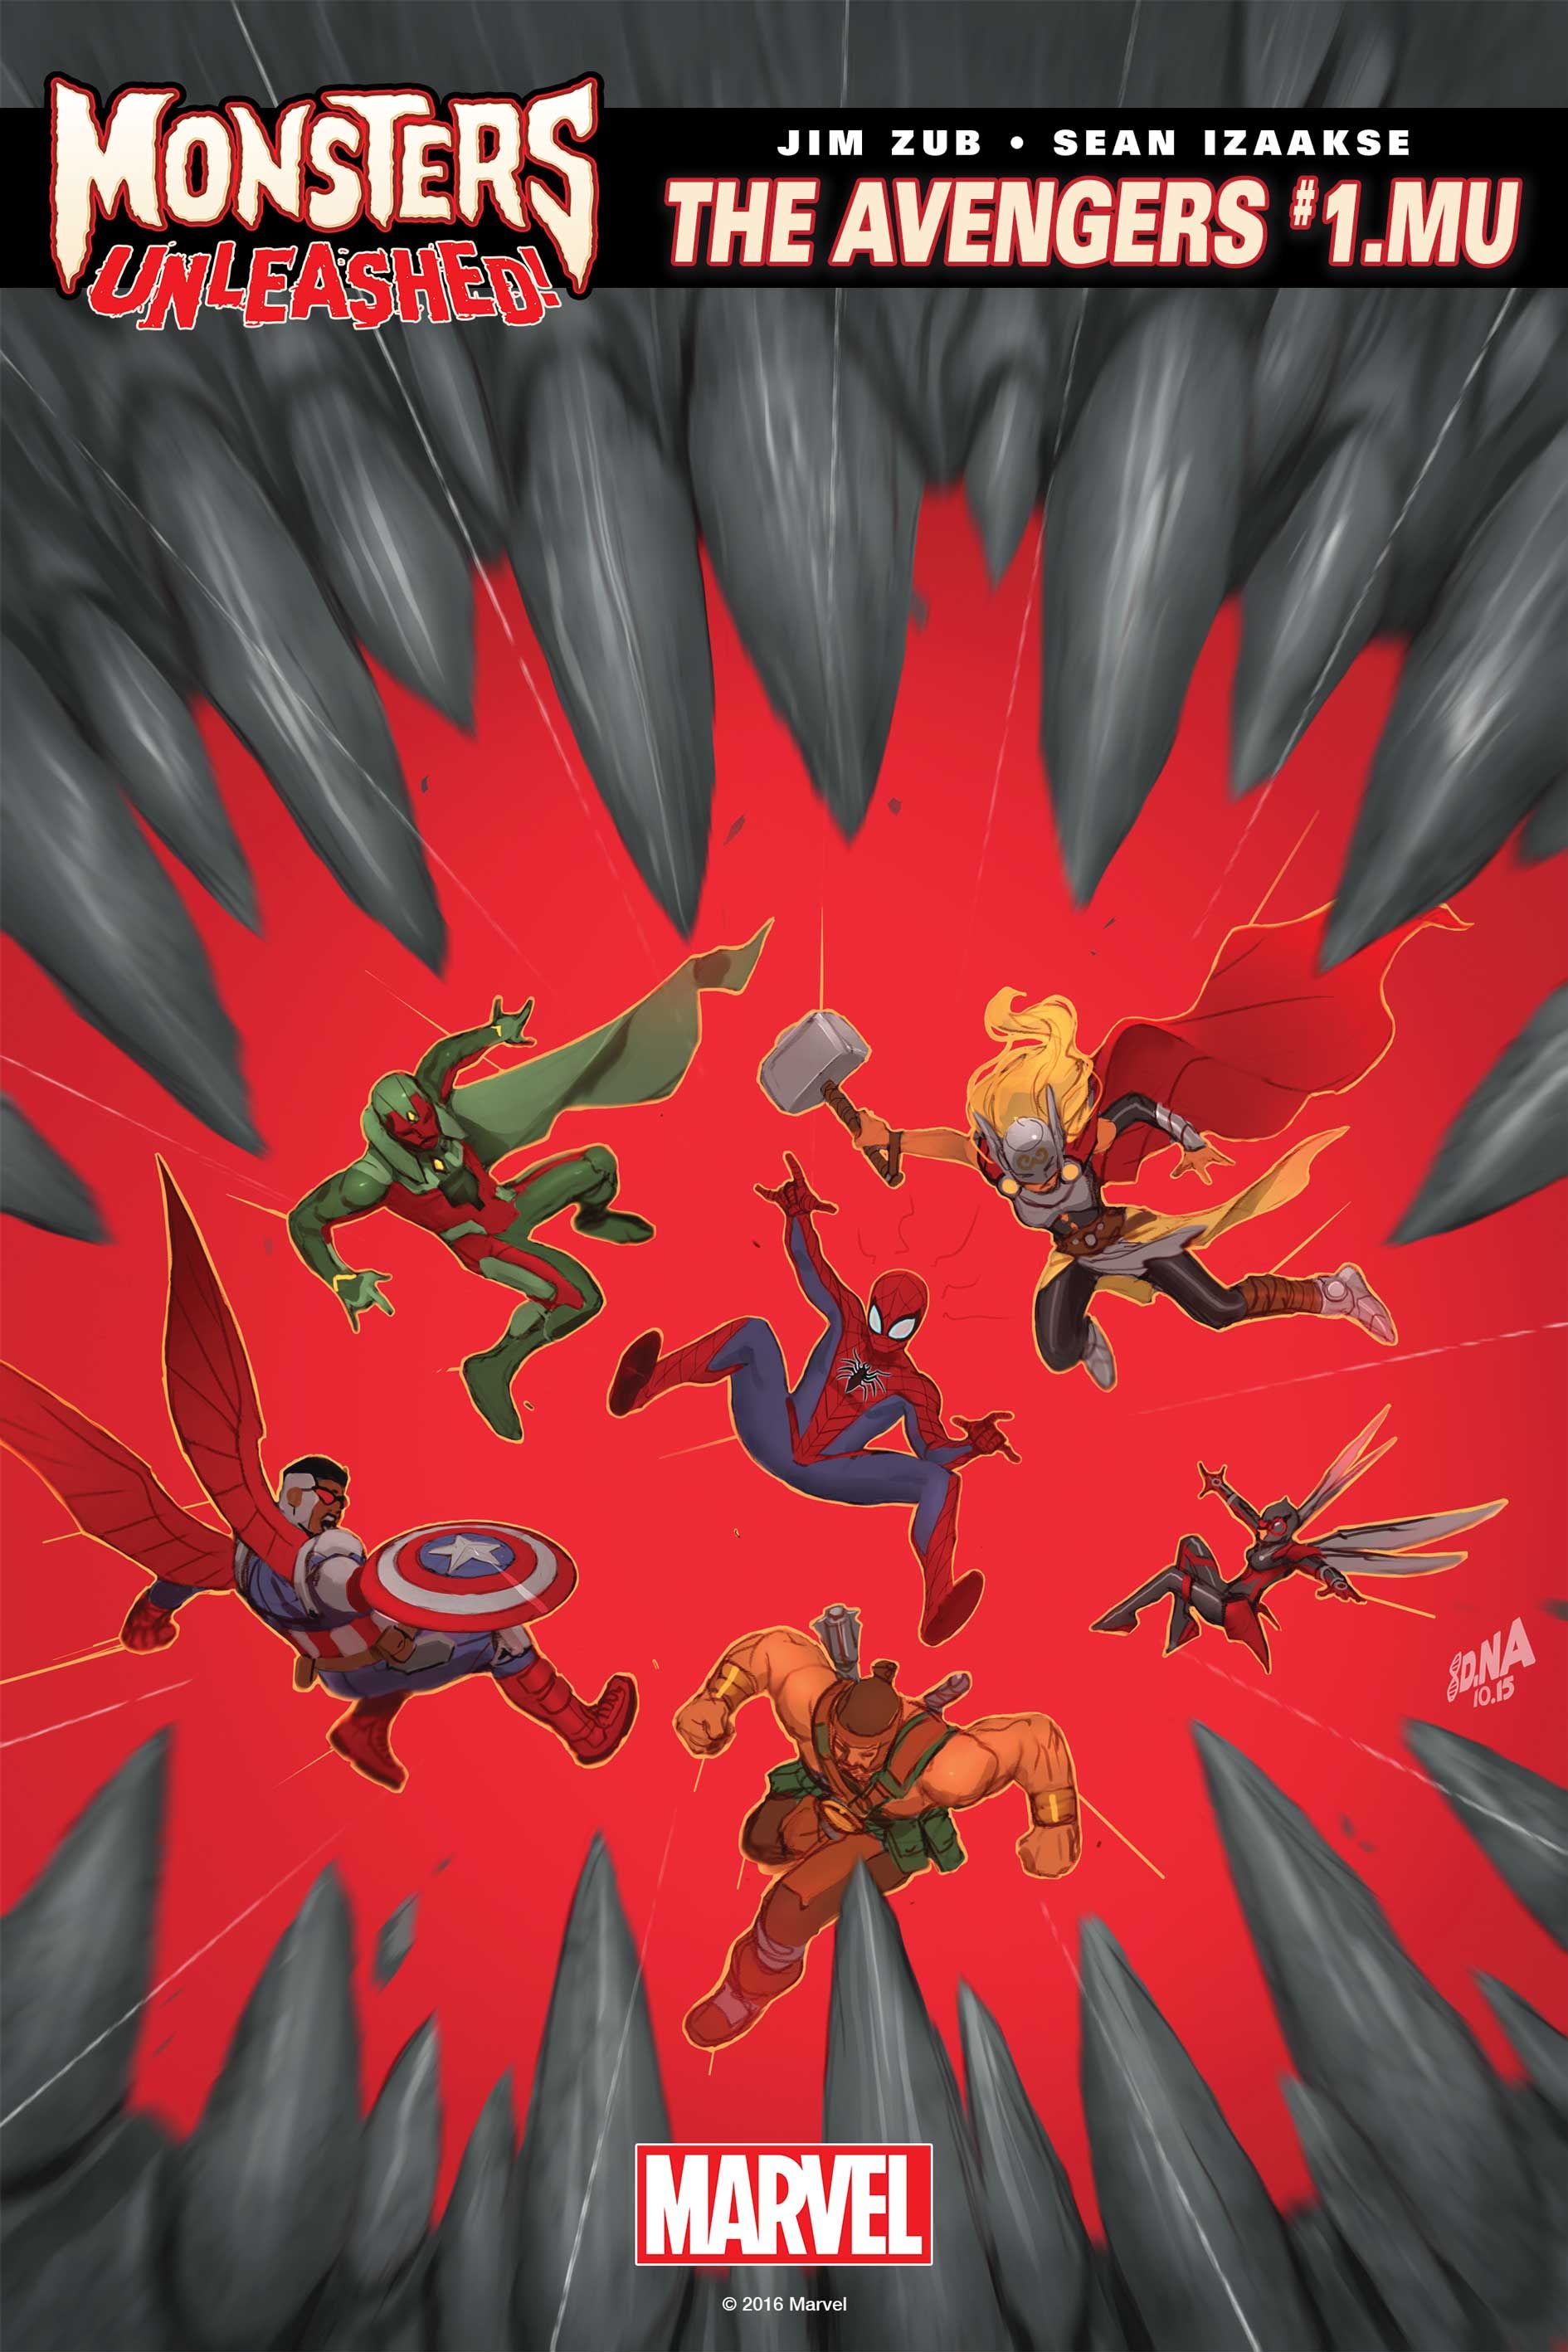 Avengers #1.mu